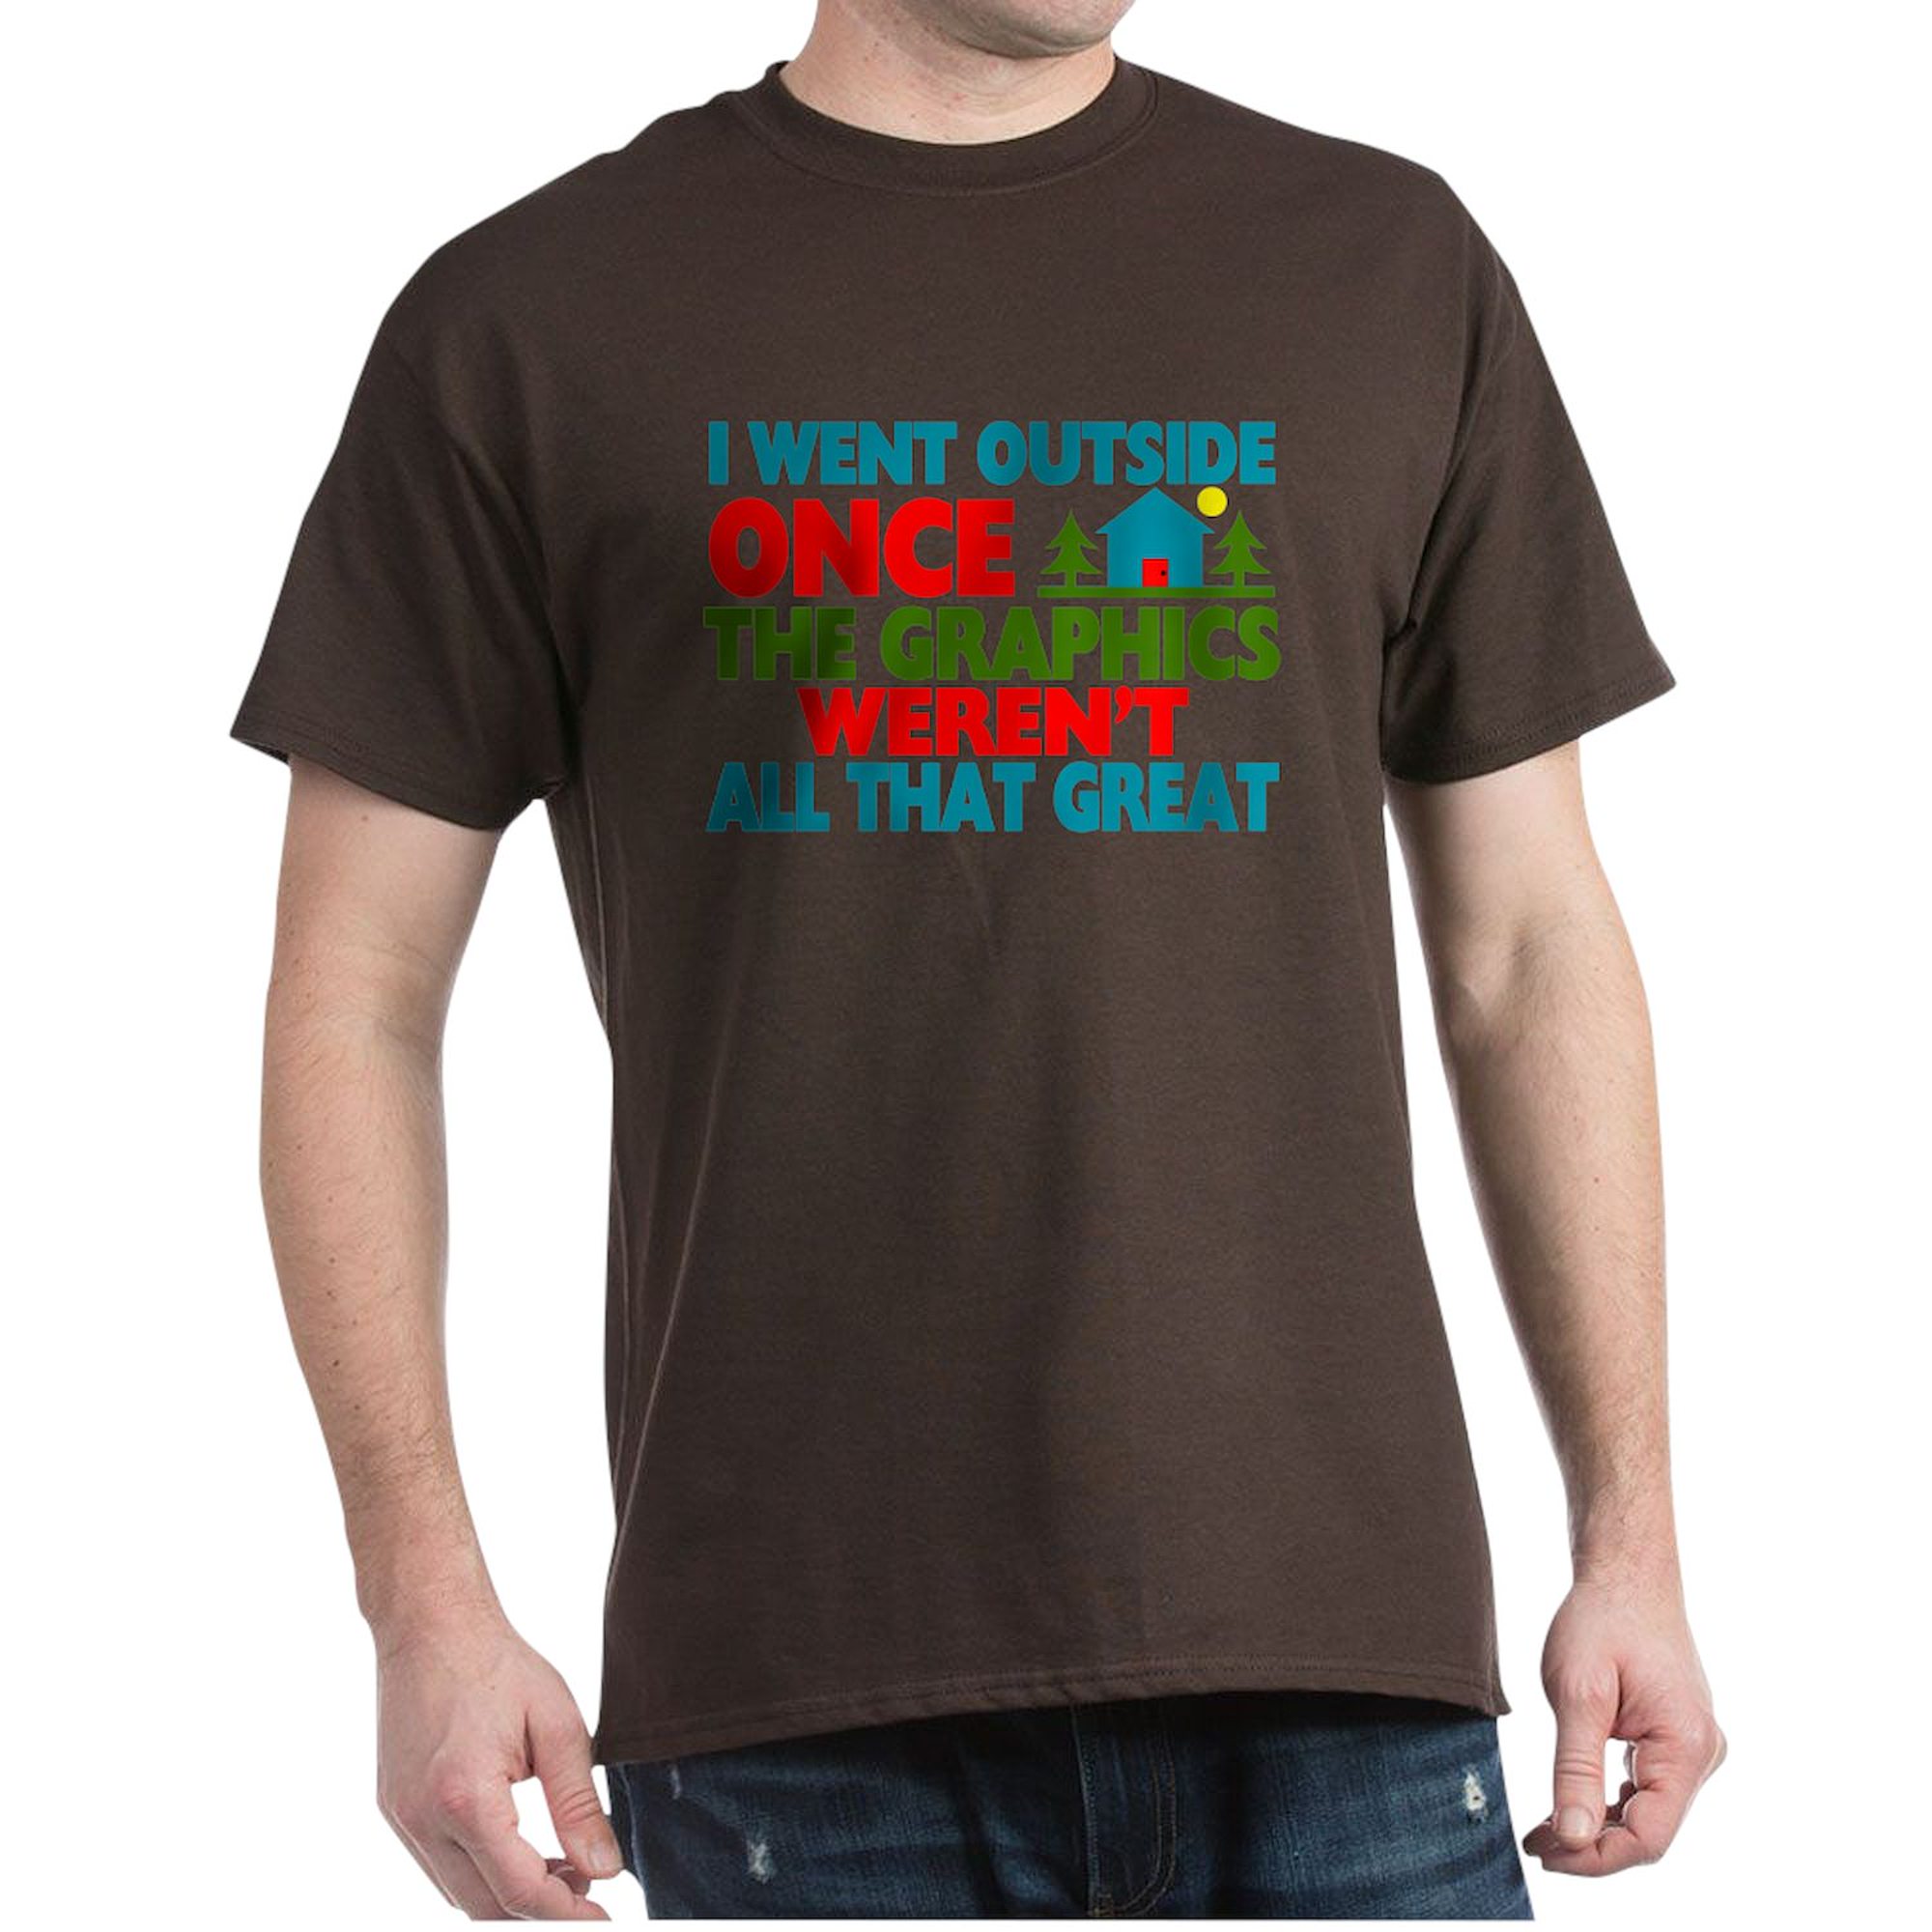 CafePress - Went Outside Graphics Weren't Great Dark T Shirt - 100% Cotton T-Shirt - image 1 of 4